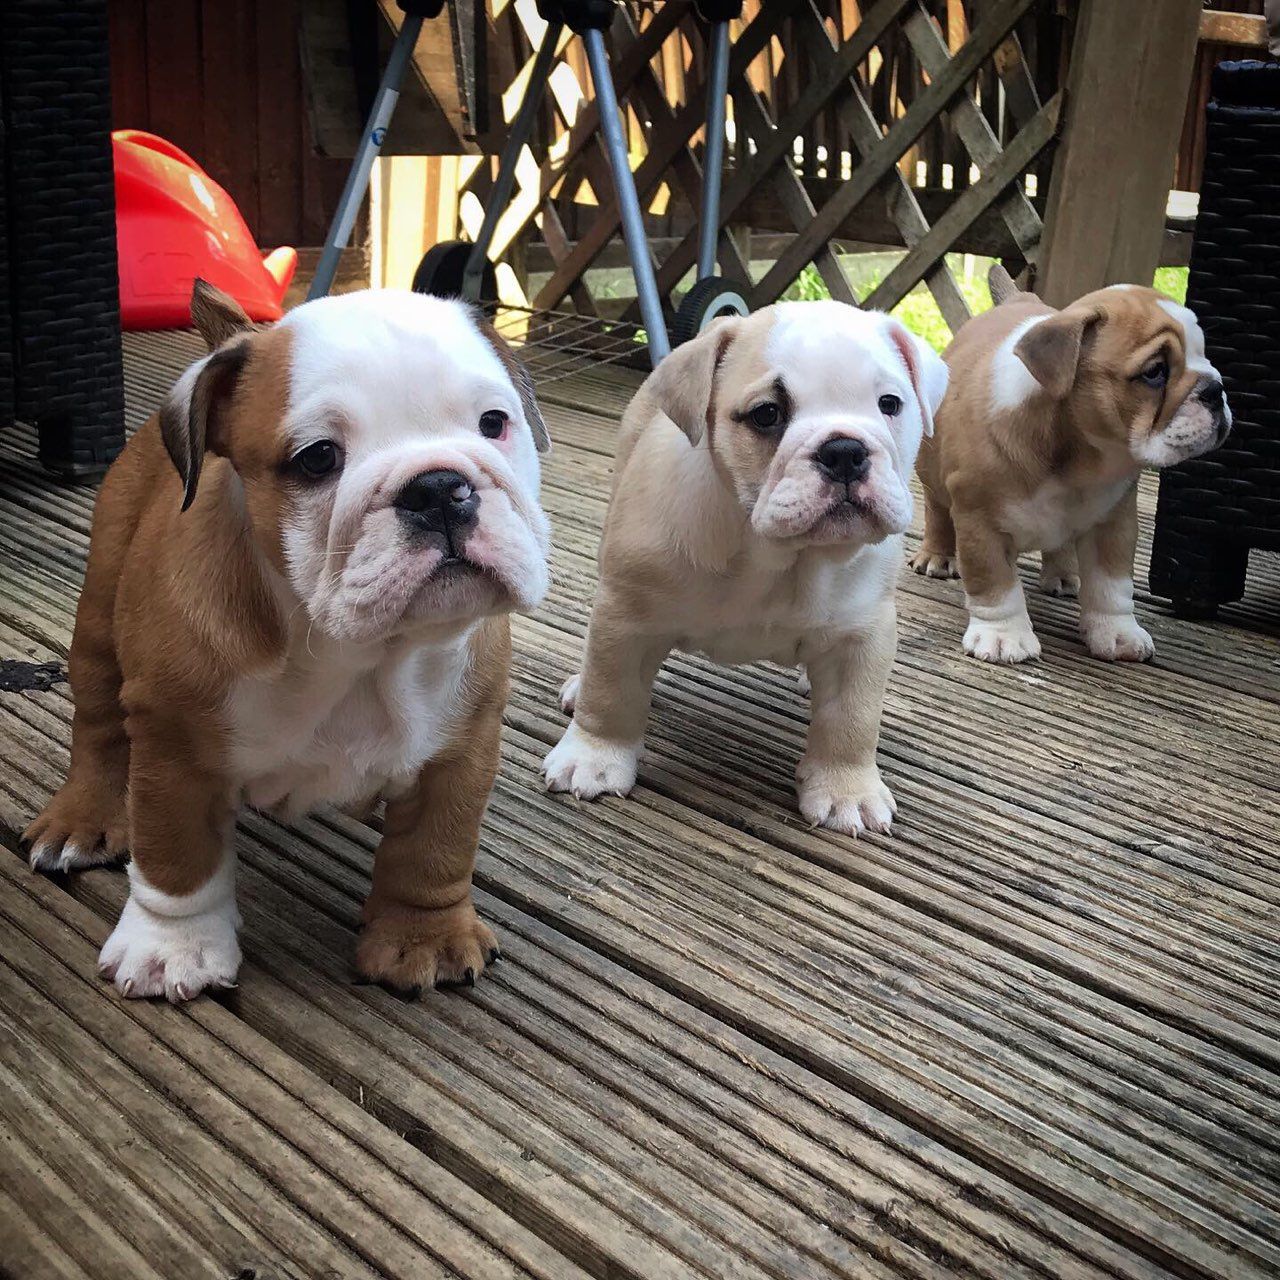 Remarkable English Bulldog puppies for adoption